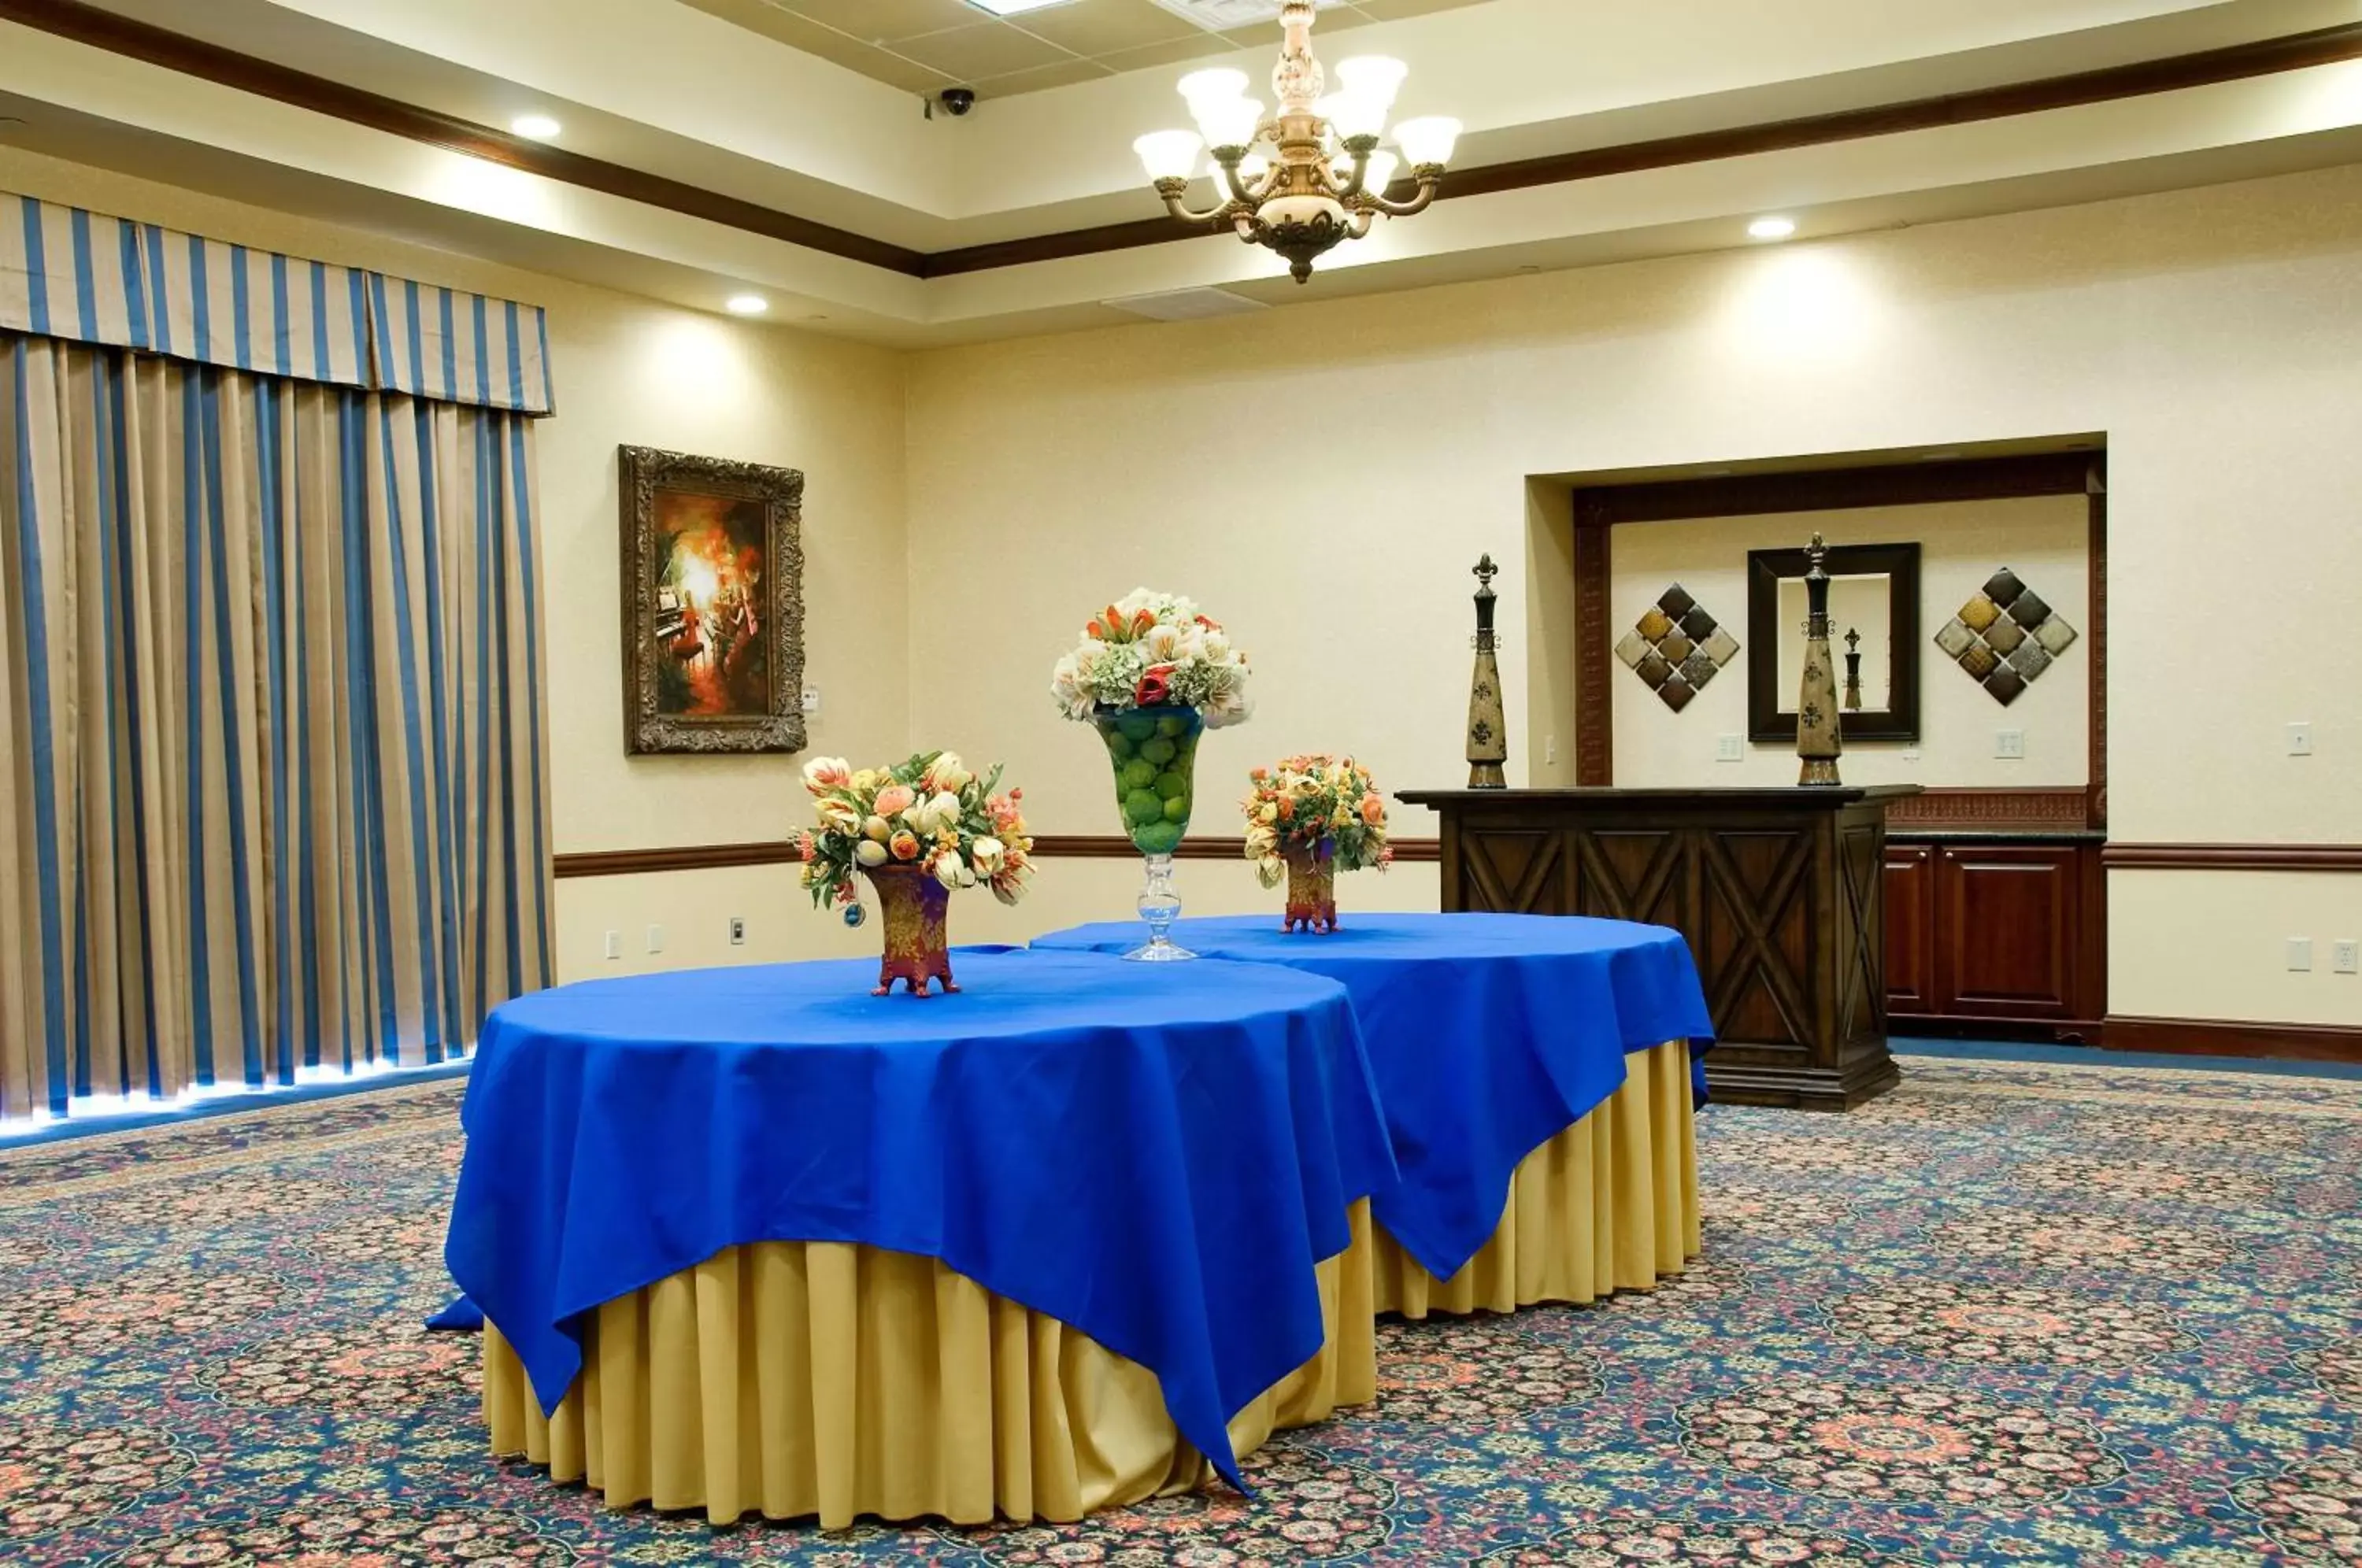 Meeting/conference room, Banquet Facilities in Hilton Garden Inn Amarillo